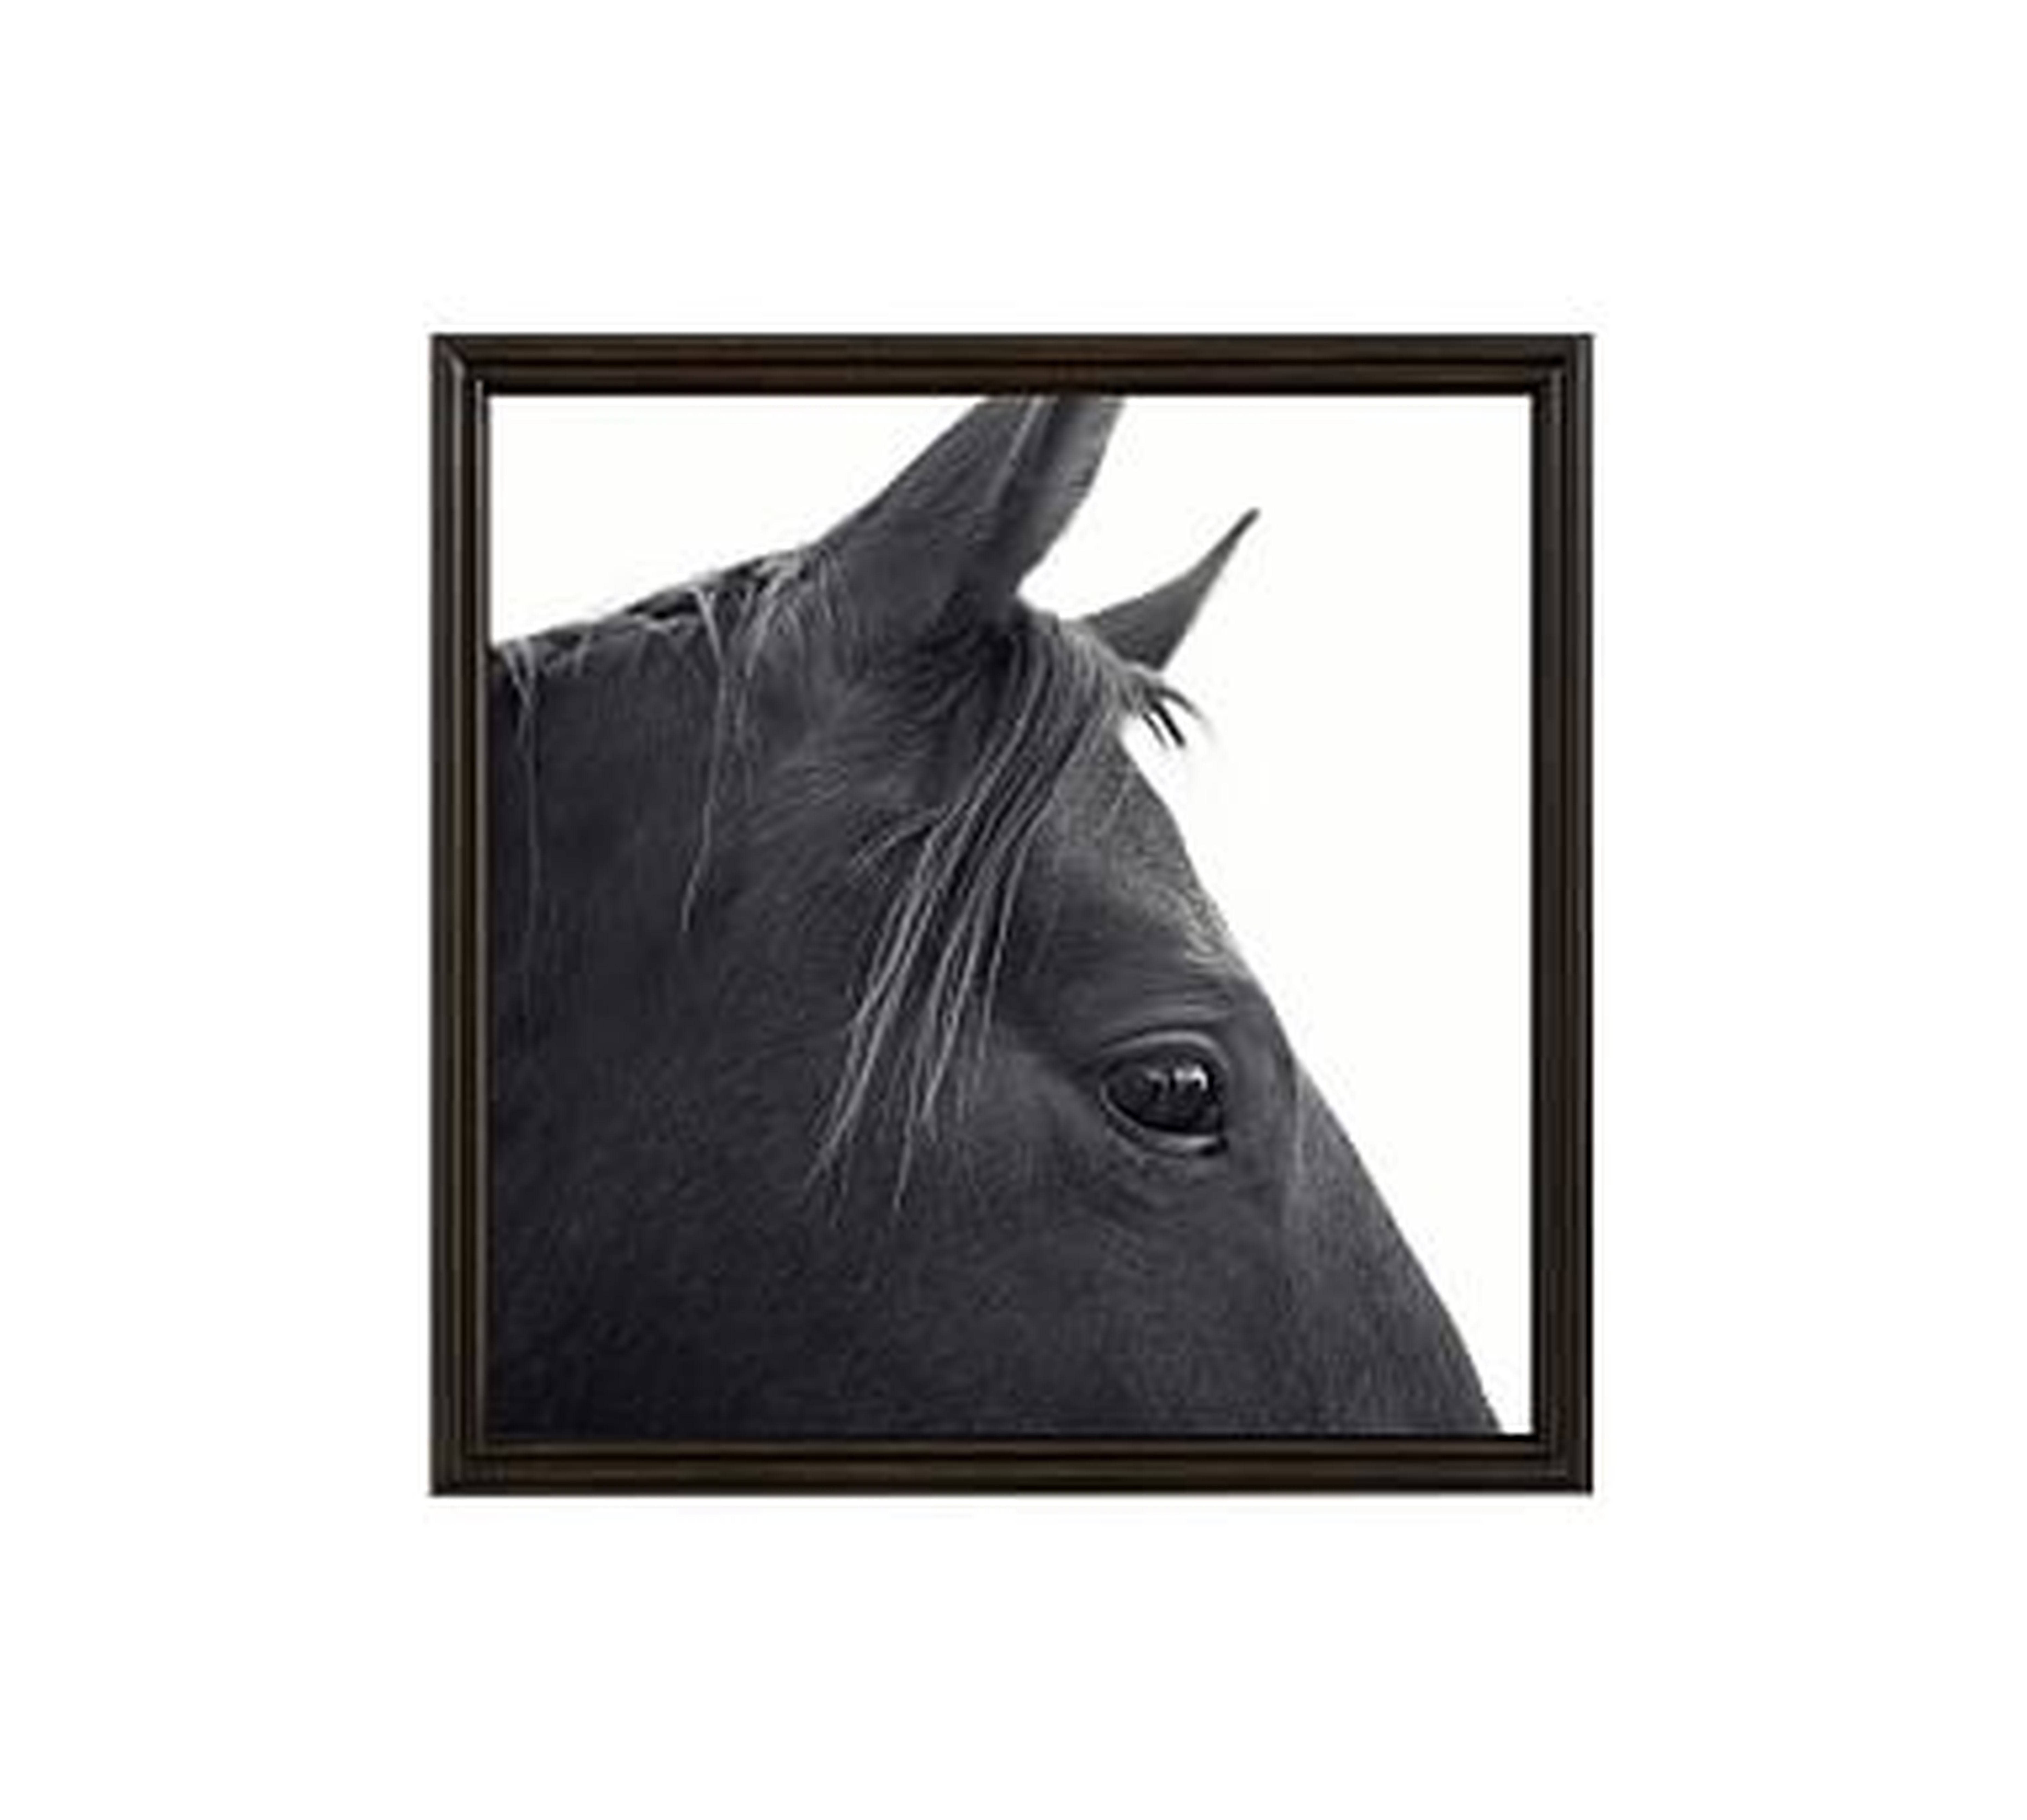 Dark Horse in Profile Framed Print by Jennifer Meyers, 25 x 25", Ridged Distressed Frame, Black, No Mat - Pottery Barn